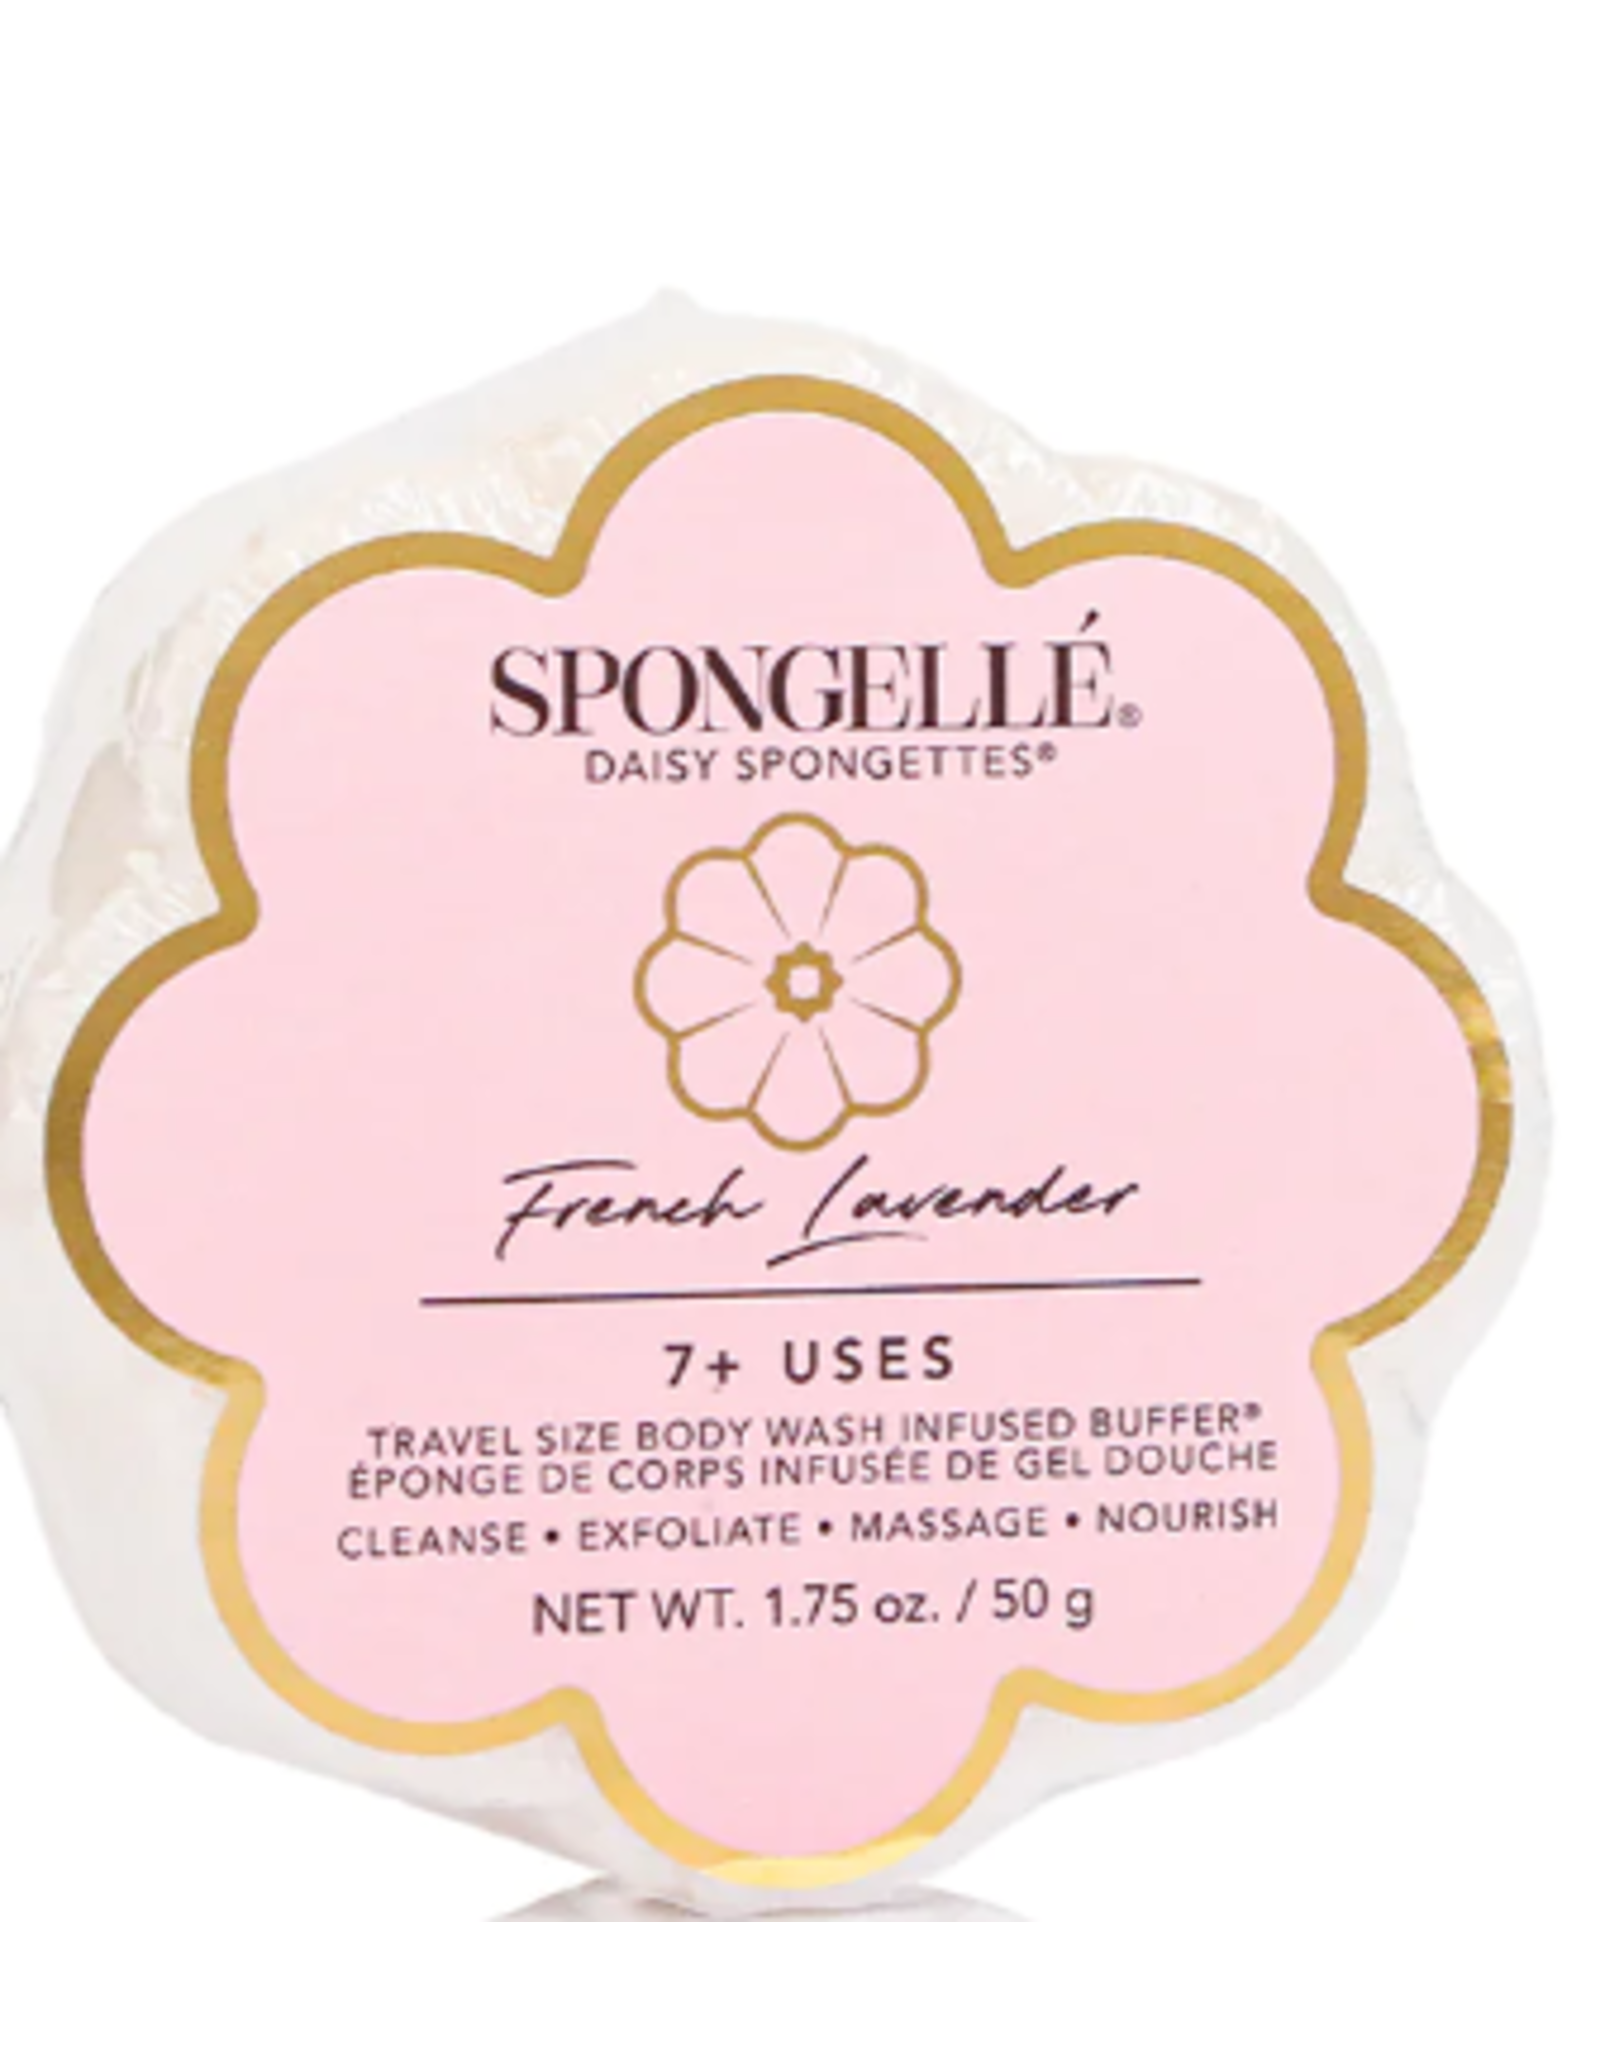 Spongelle French Lavender Daisy Collection Spongette